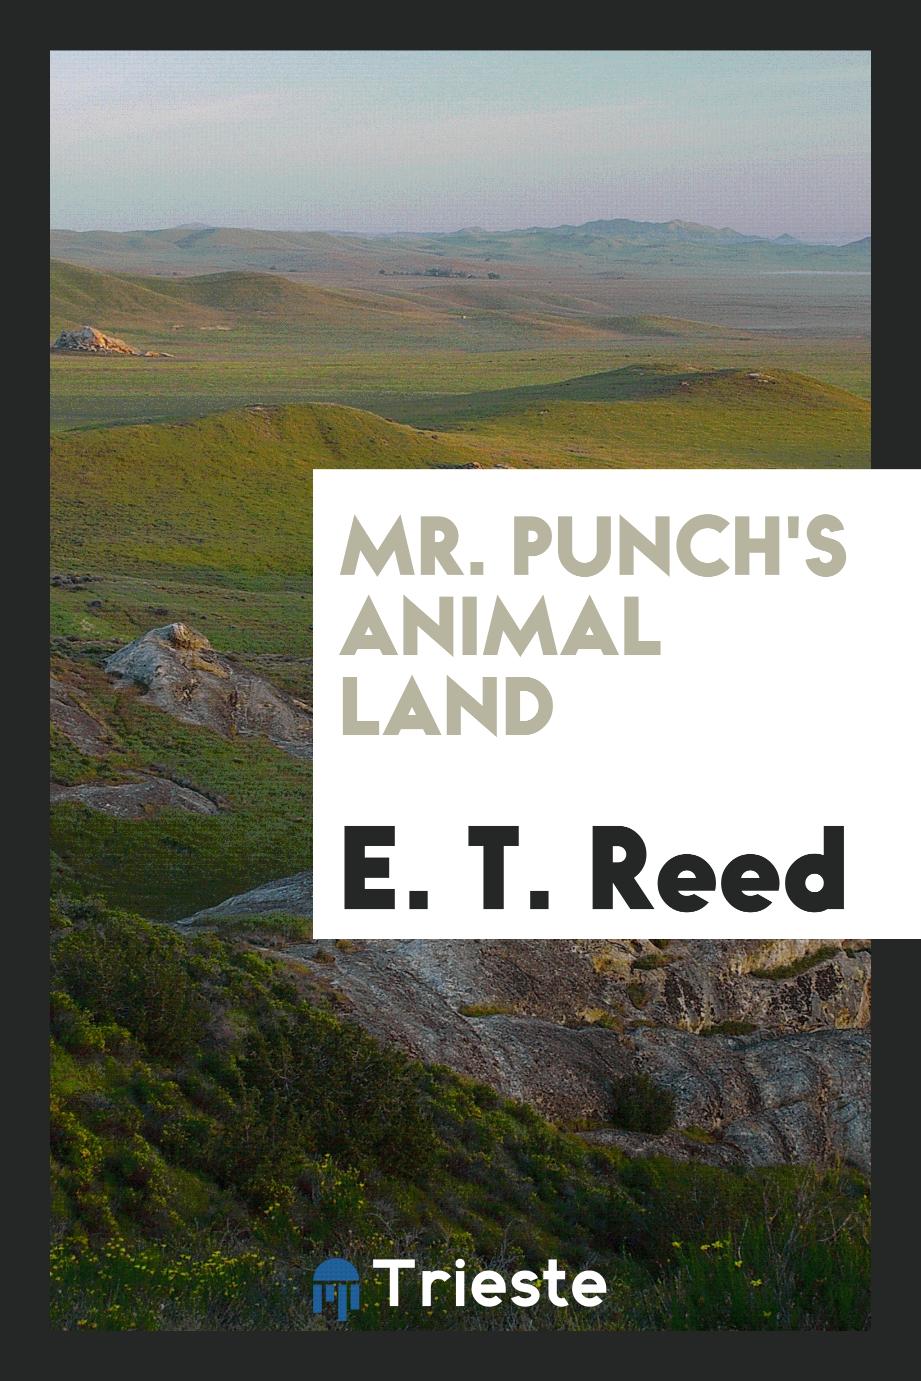 Mr. Punch's animal land